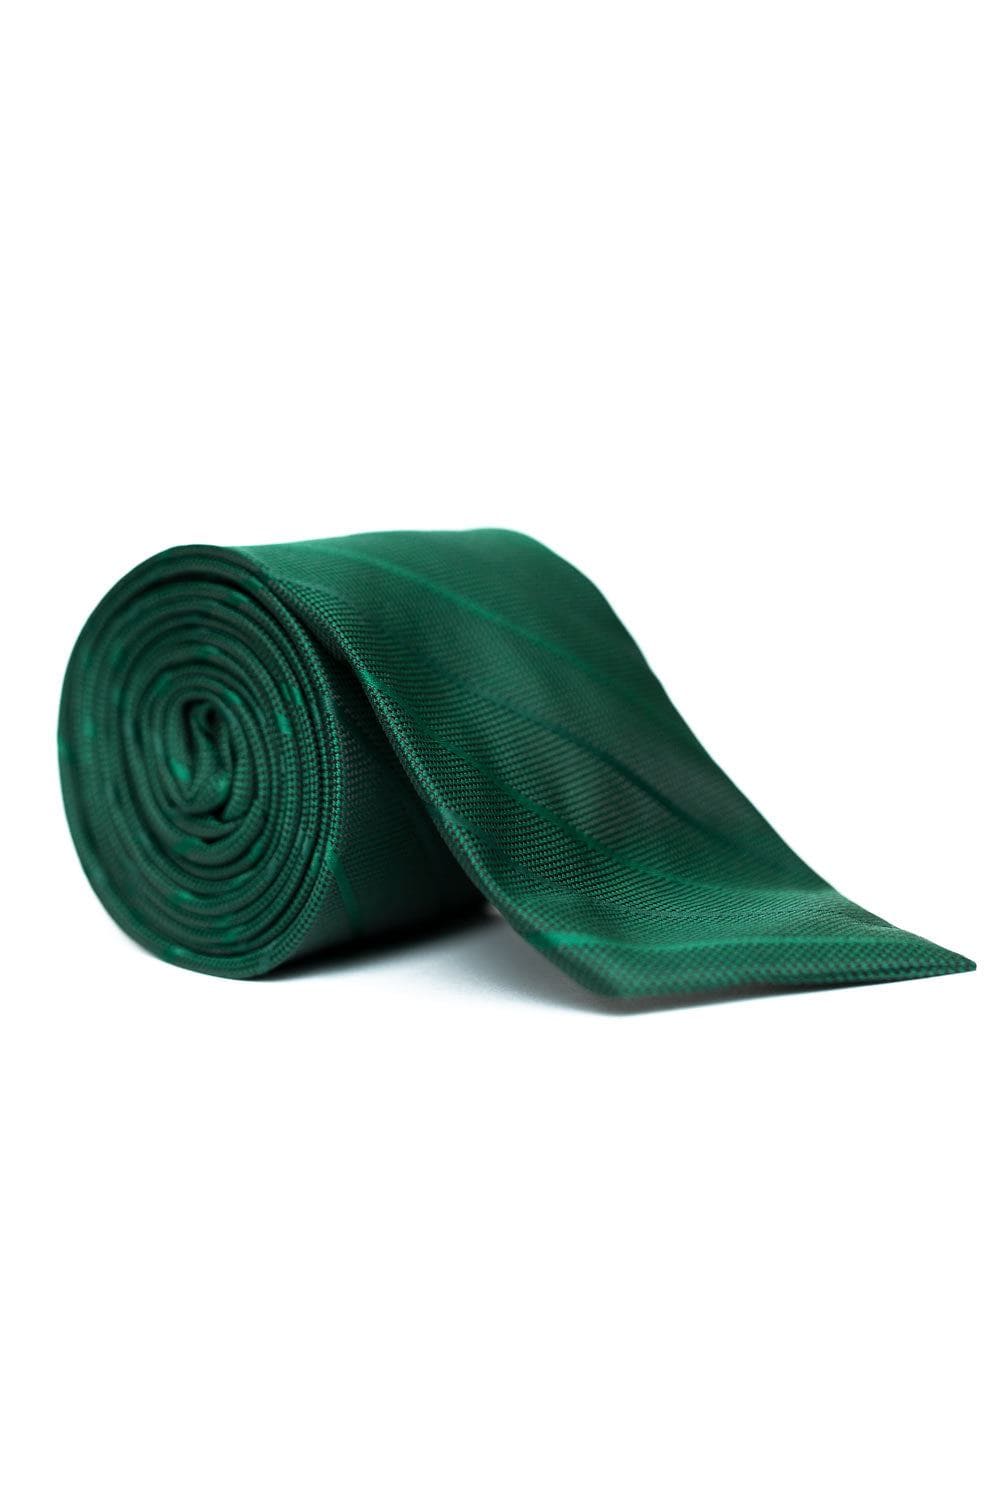 Emerald|Kennedy Blue Coordinating Pinstripe Tie